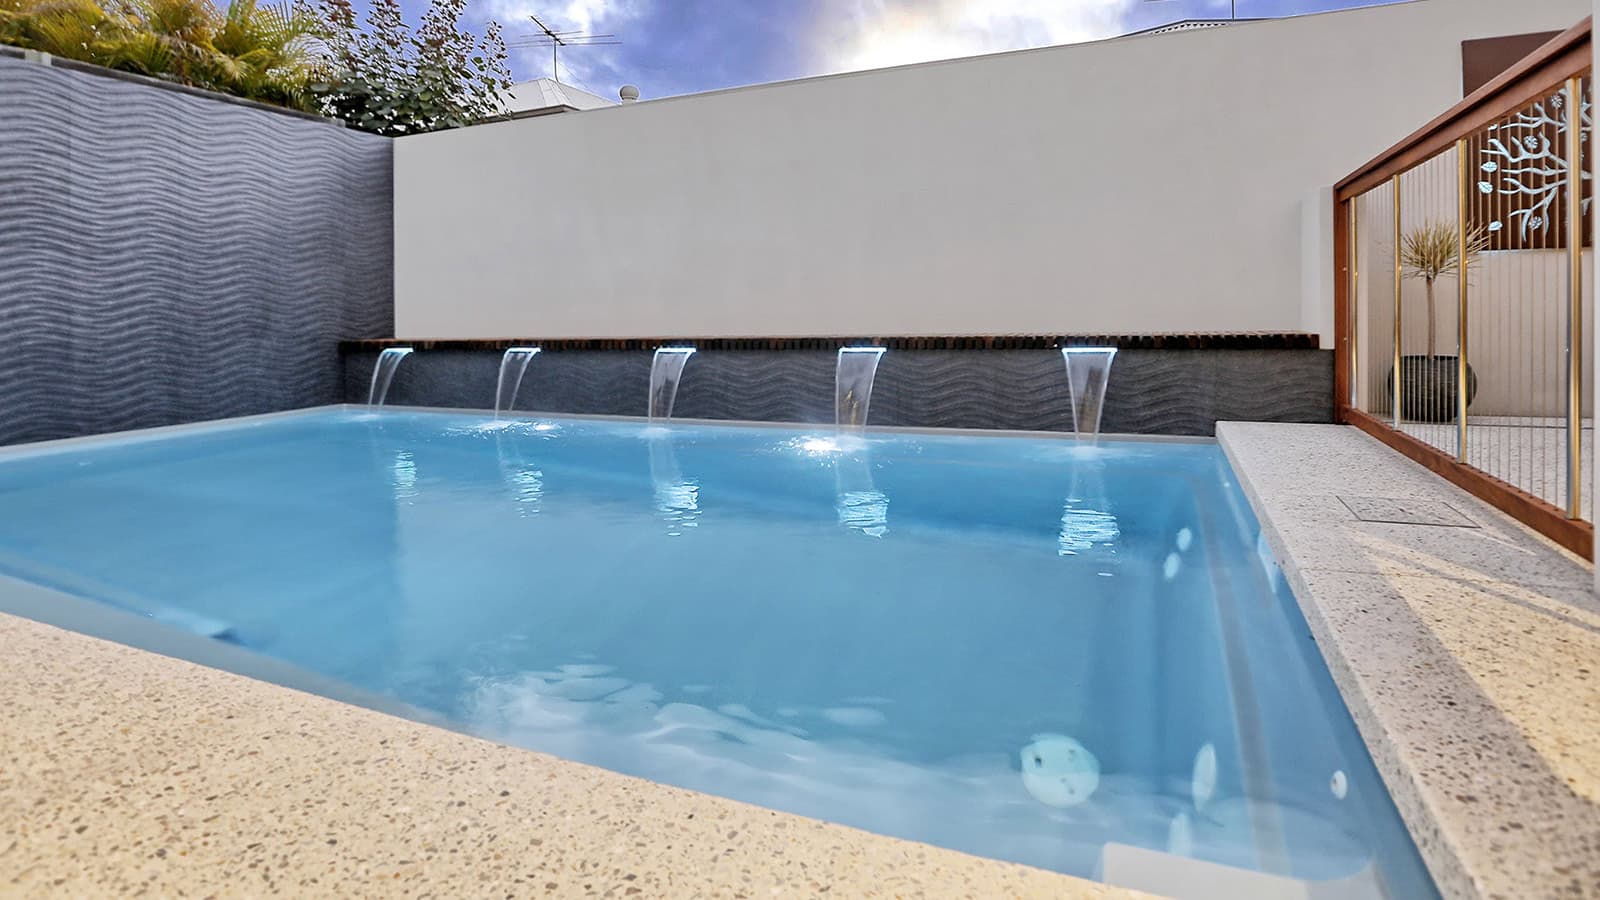 The Imagine Pools Premiere fibreglass swimming pool